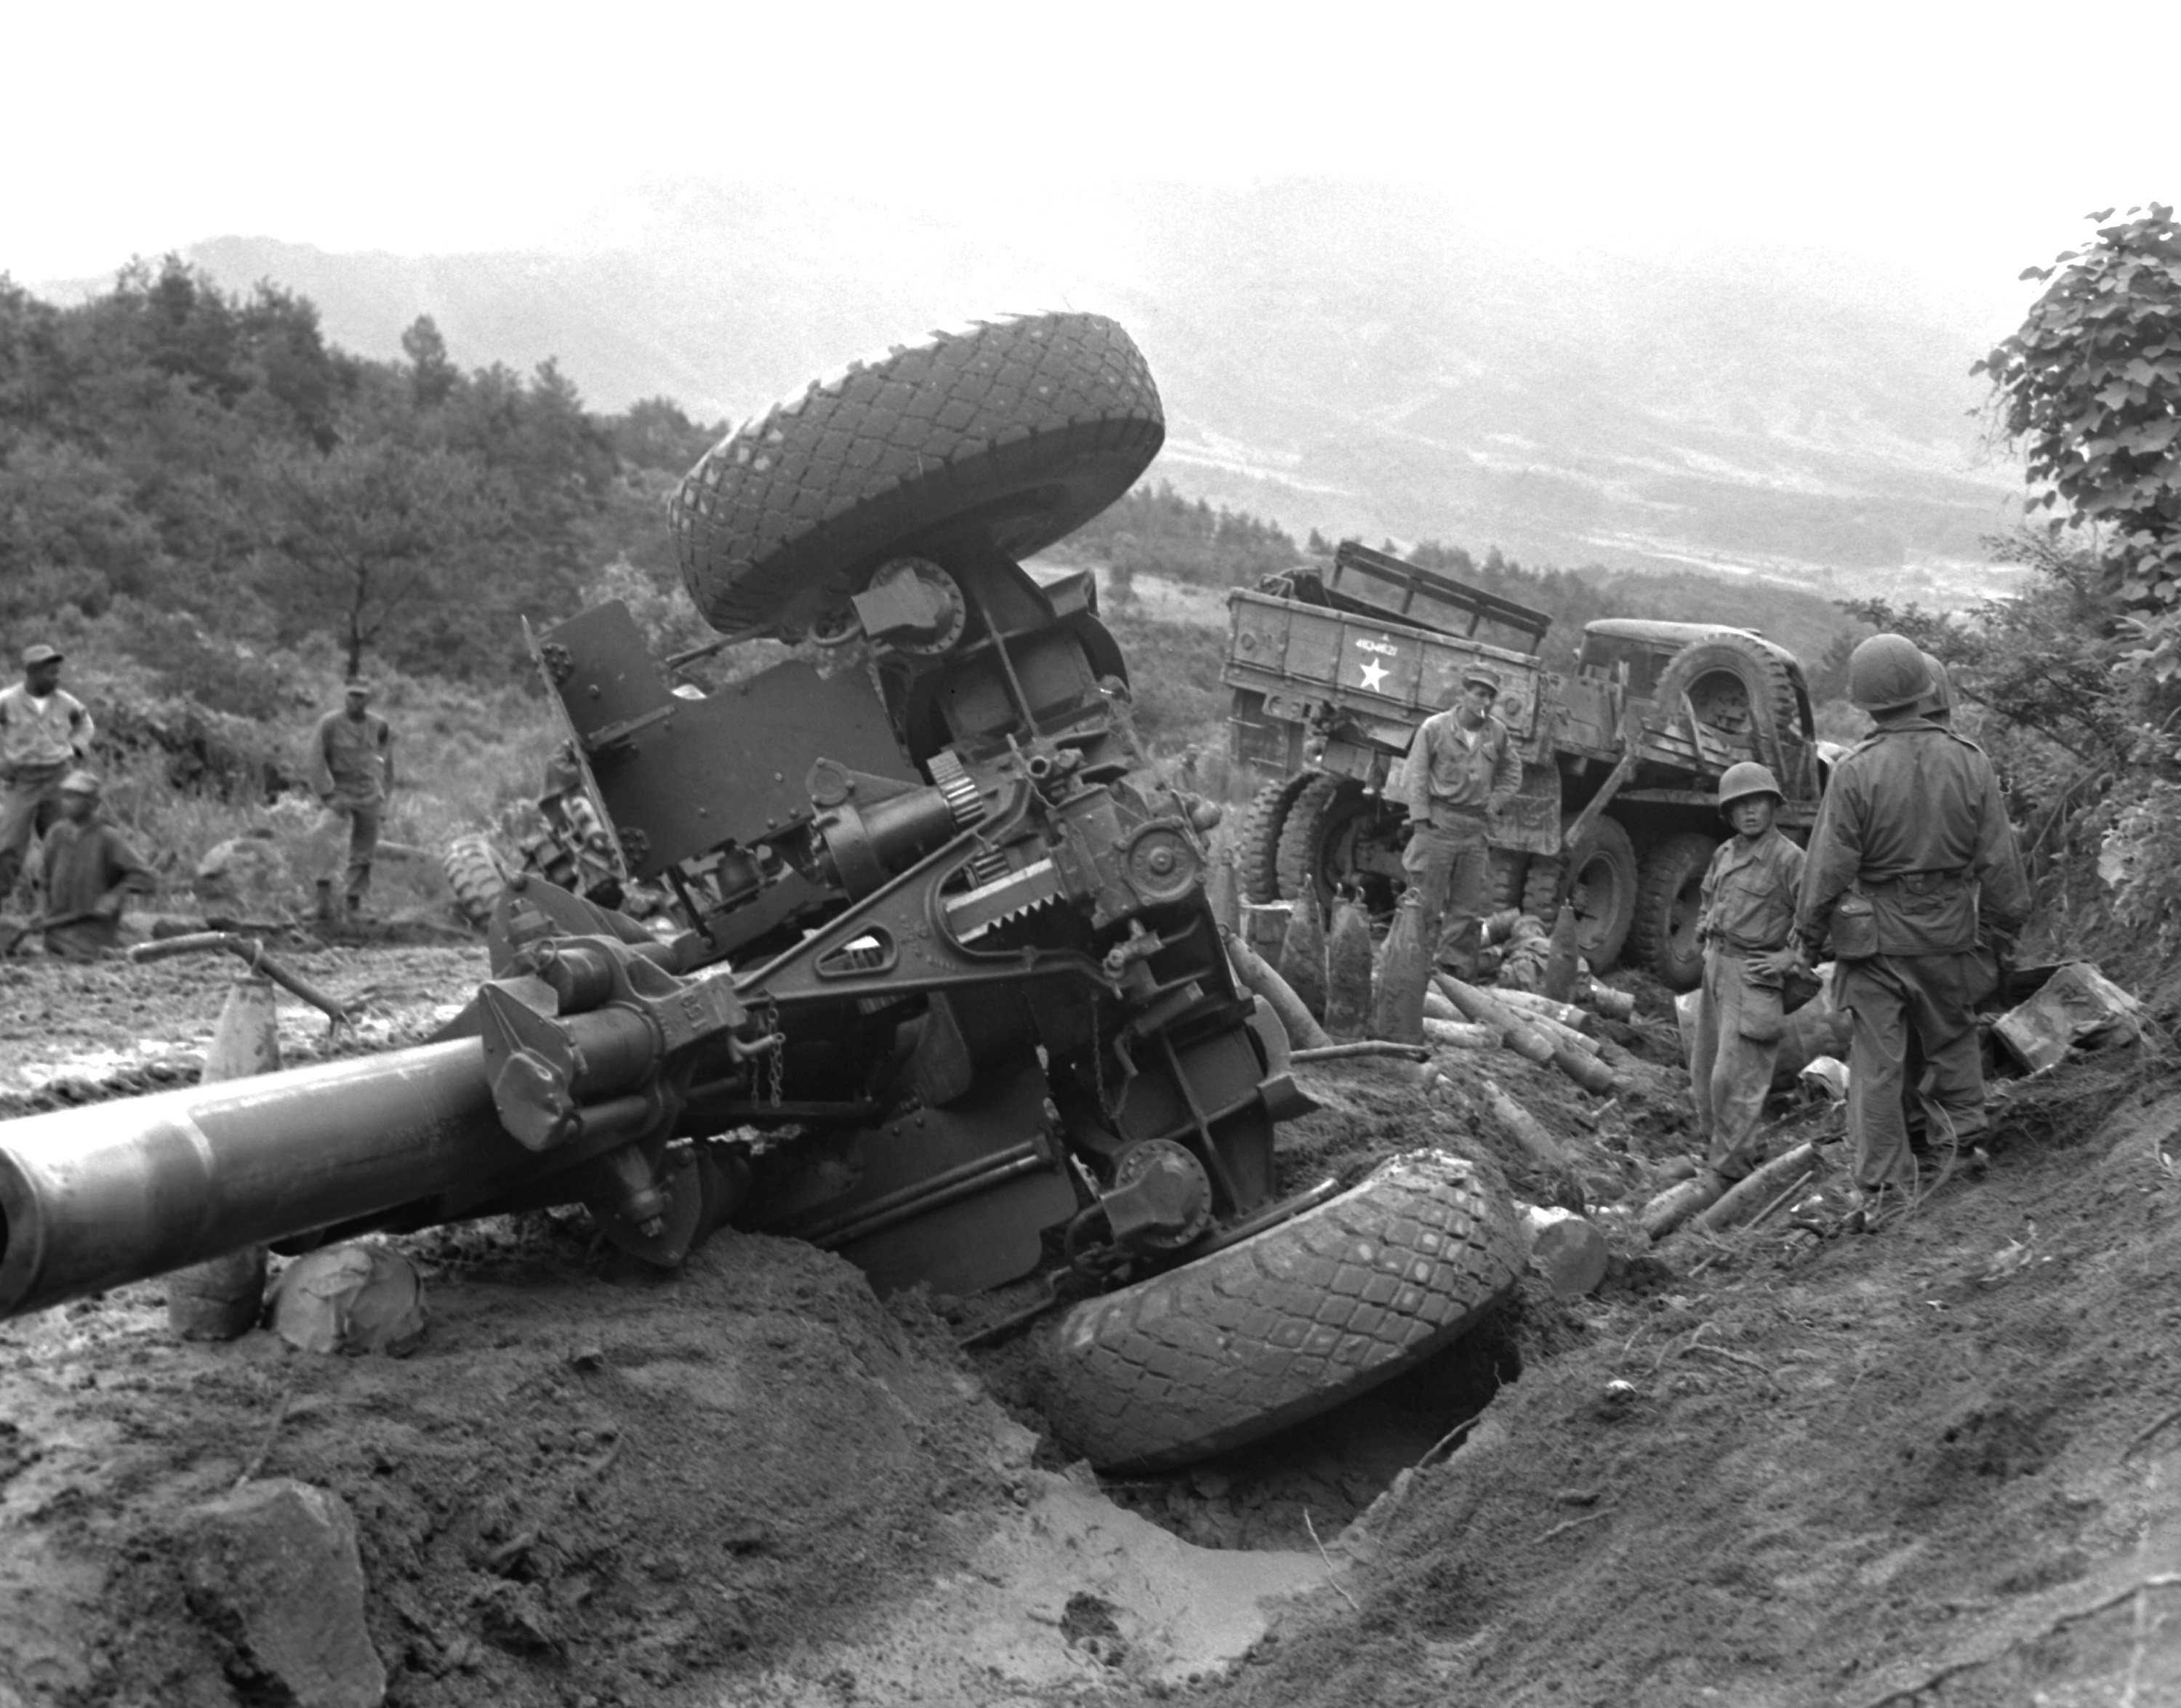 Flipped 155 mm Howitzer M1, Korea, 14 Jul 1953